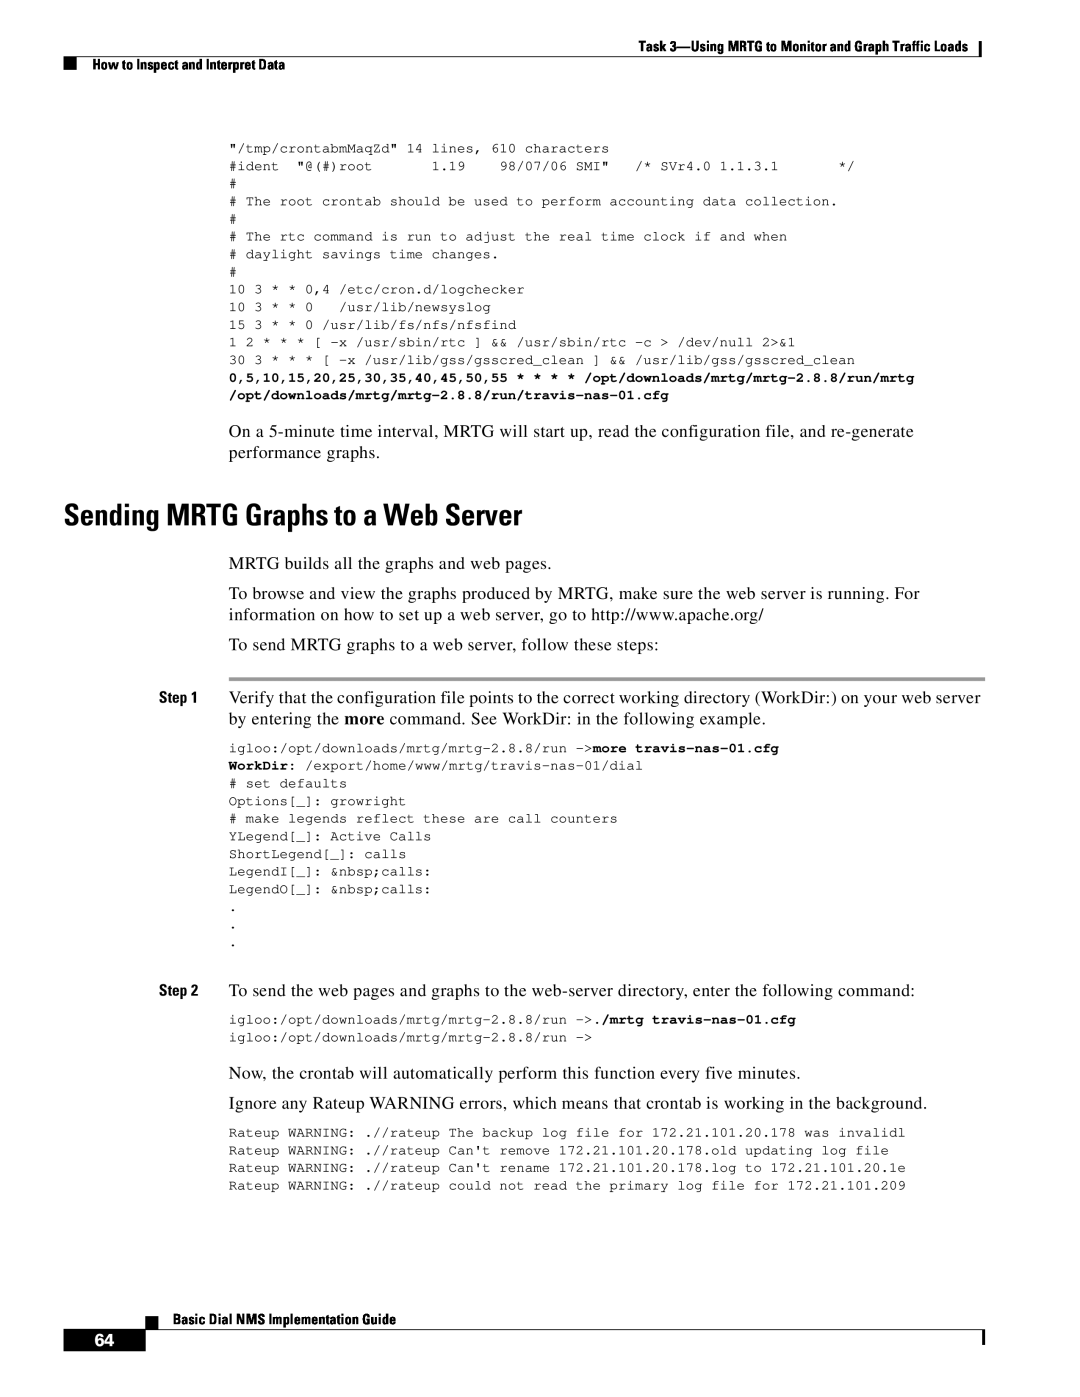 Cisco Systems Dial NMS manual Sending MRTG Graphs to a Web Server 